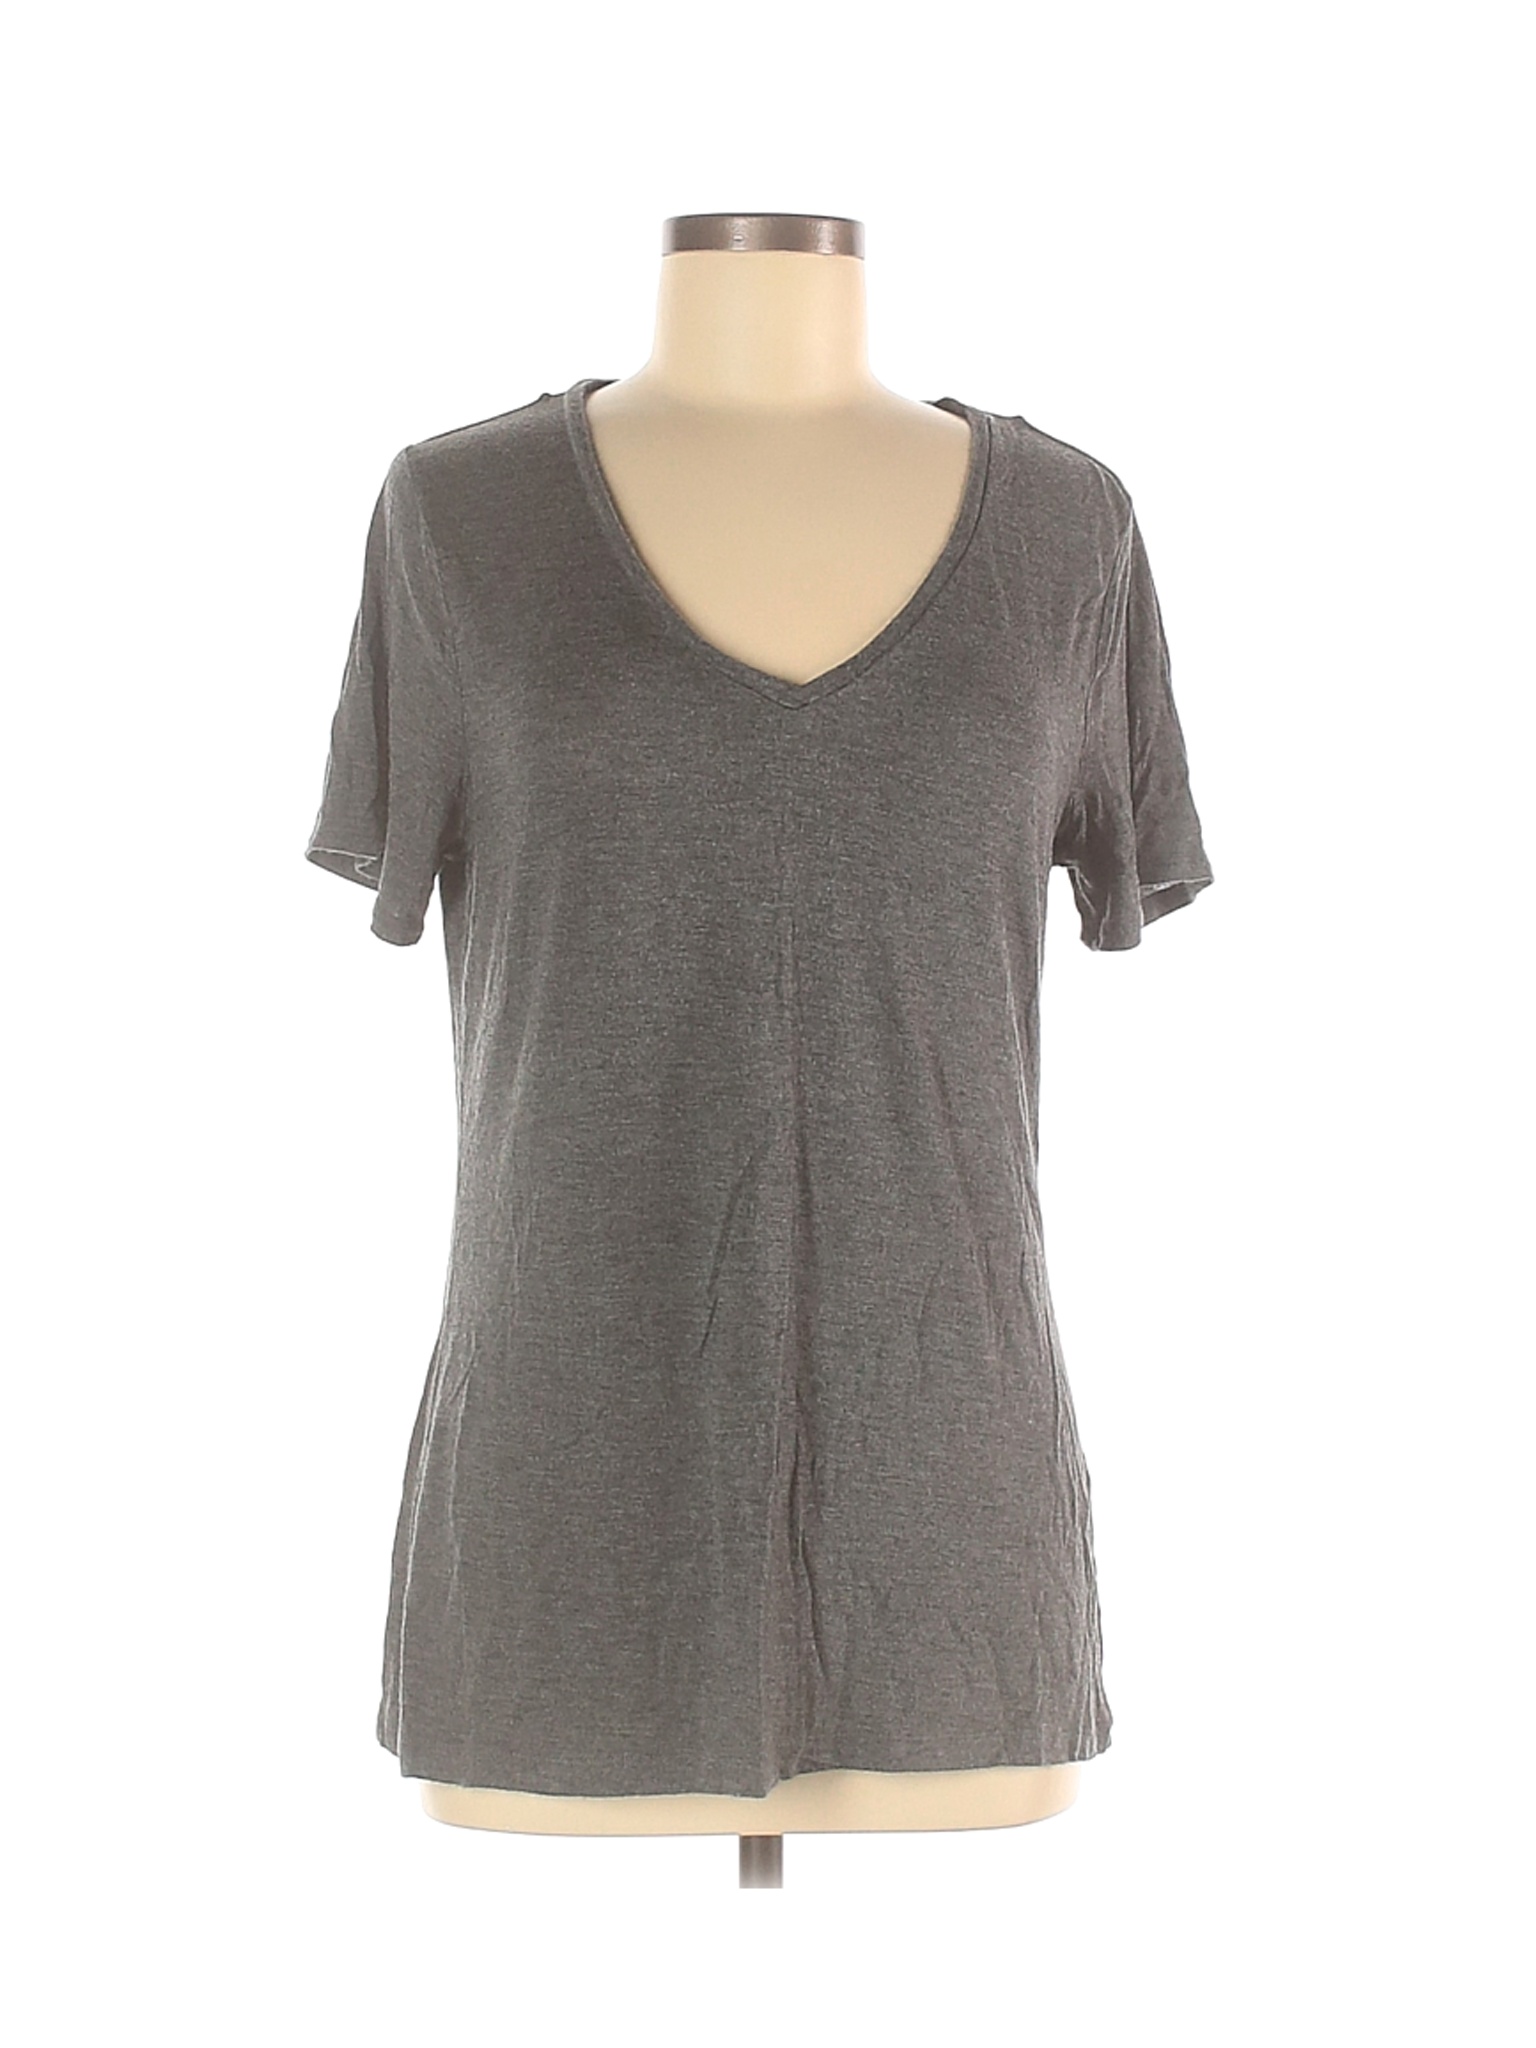 Apt. 9 Women Gray Short Sleeve T-Shirt M | eBay